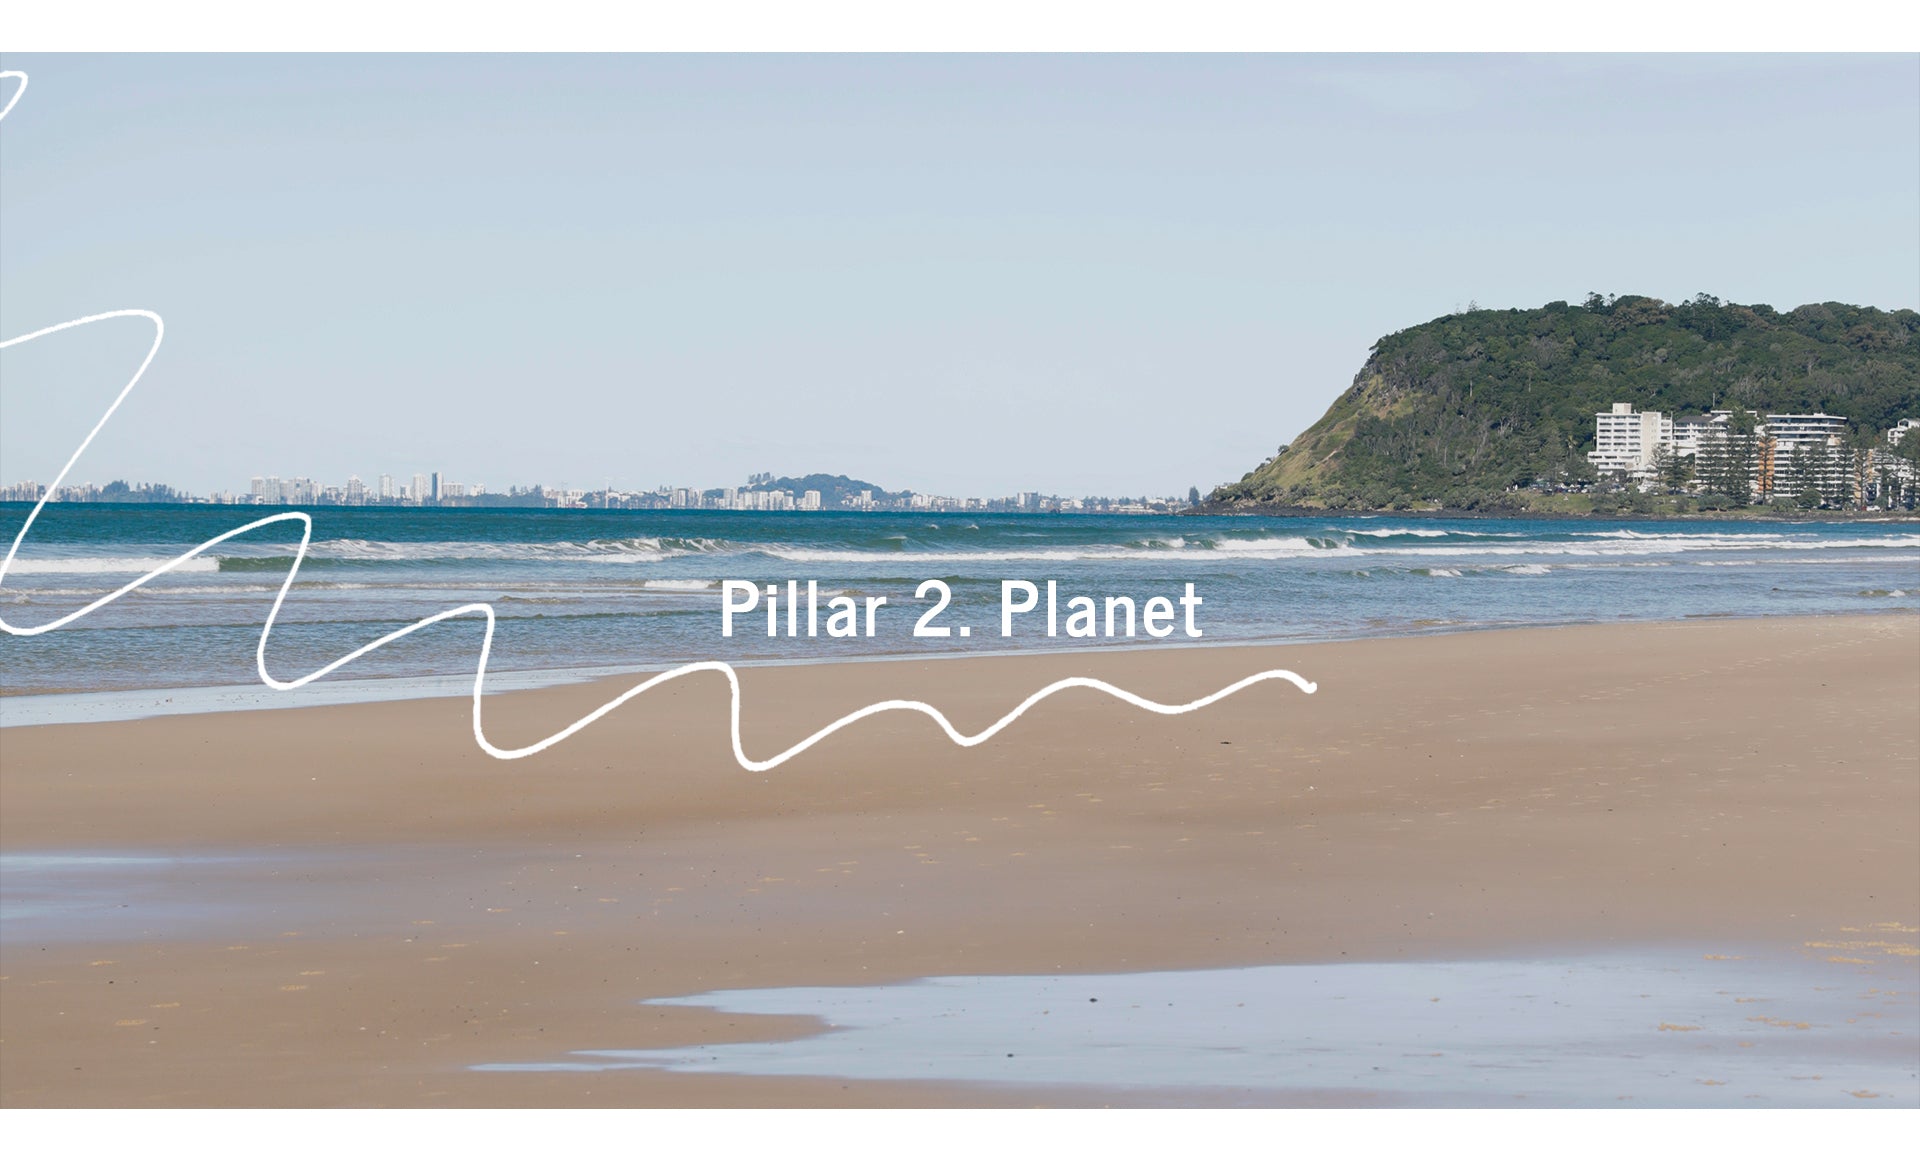 Pillar 2. Planet